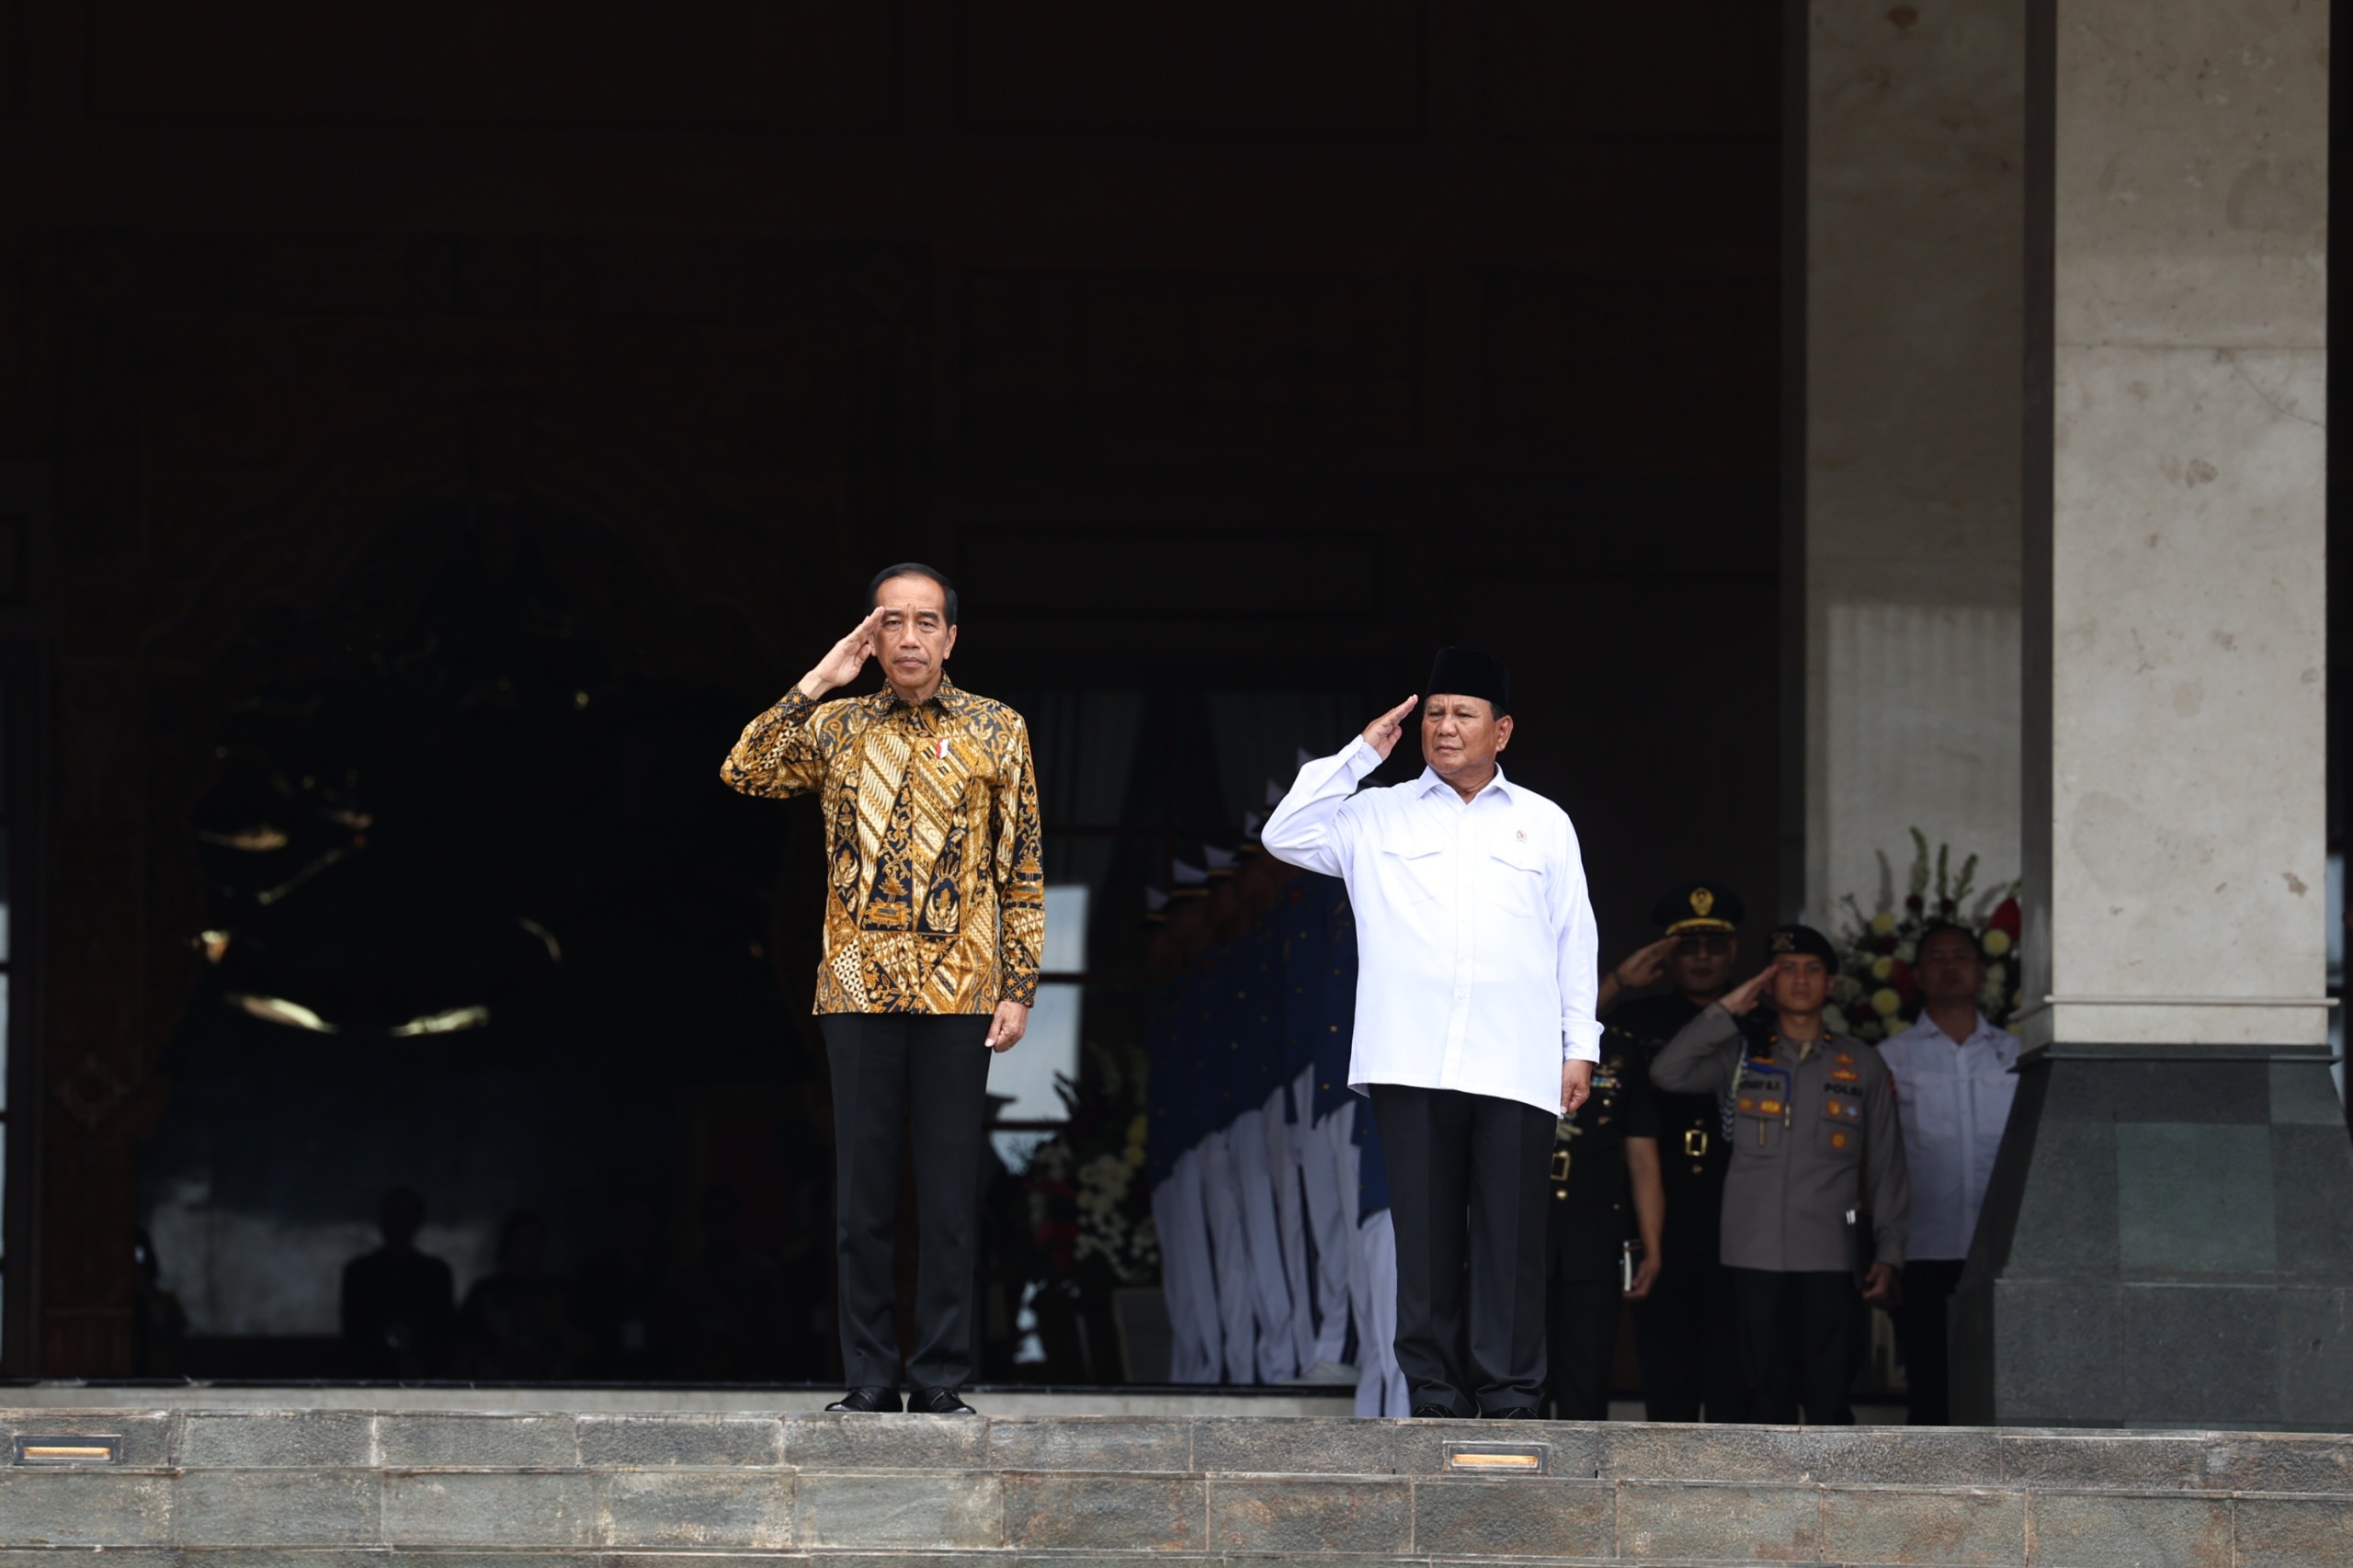 Lanjutkan Hilirisasi Industri, Prabowo Ingat Kata Jokowi: RI Tak Mungkin Makmur Kalau Jual Bahan Mentah ke Luar Negeri